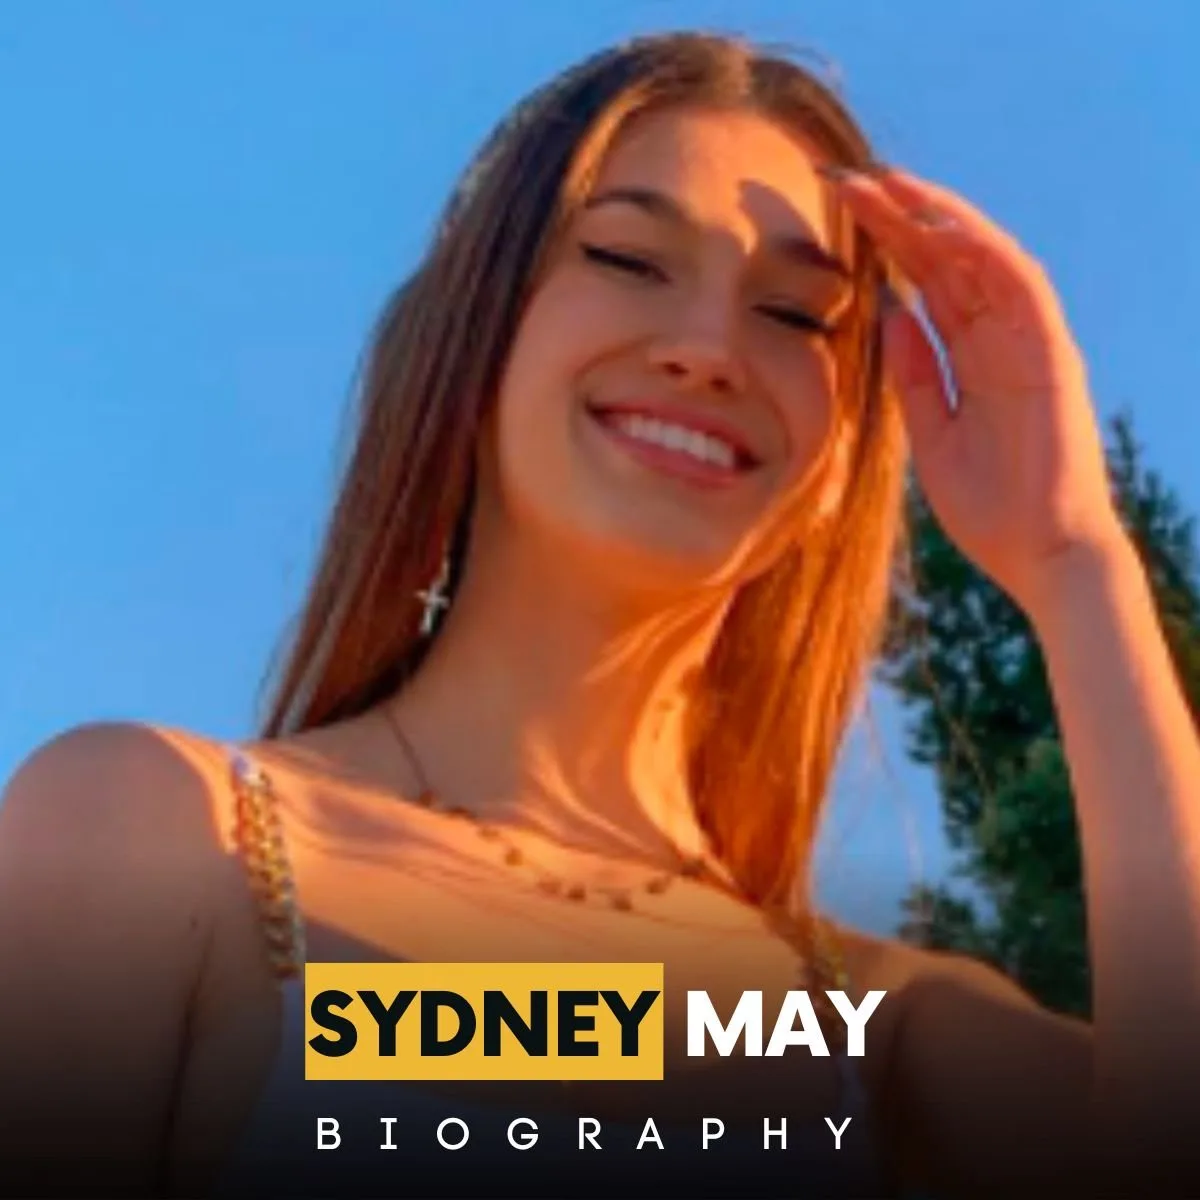 Sydney May Biography